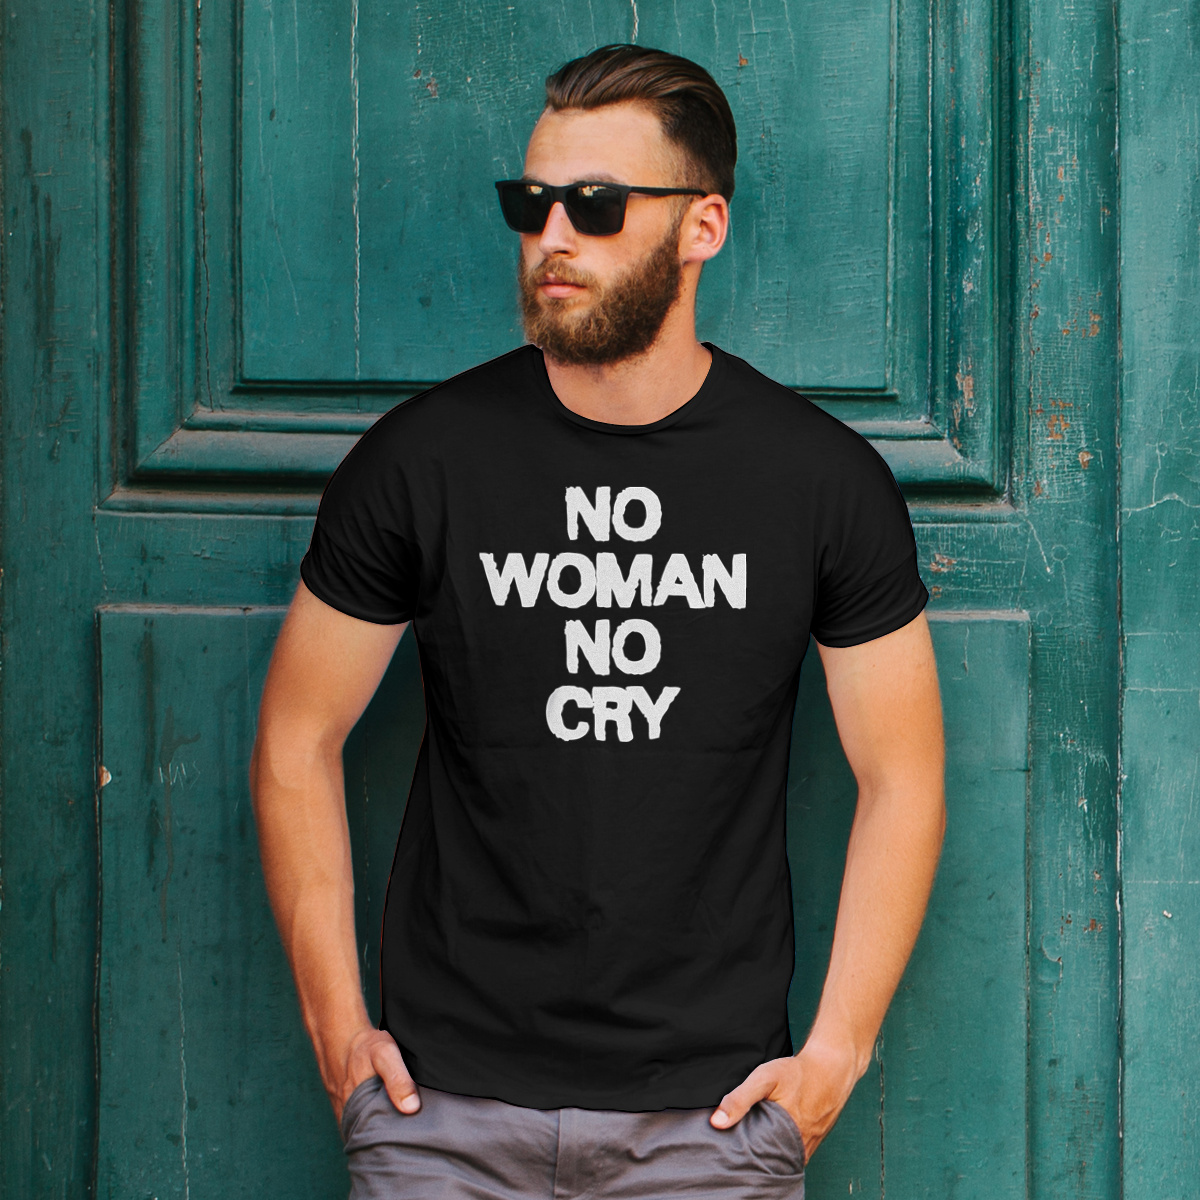 No woman no cry - Męska Koszulka Czarna